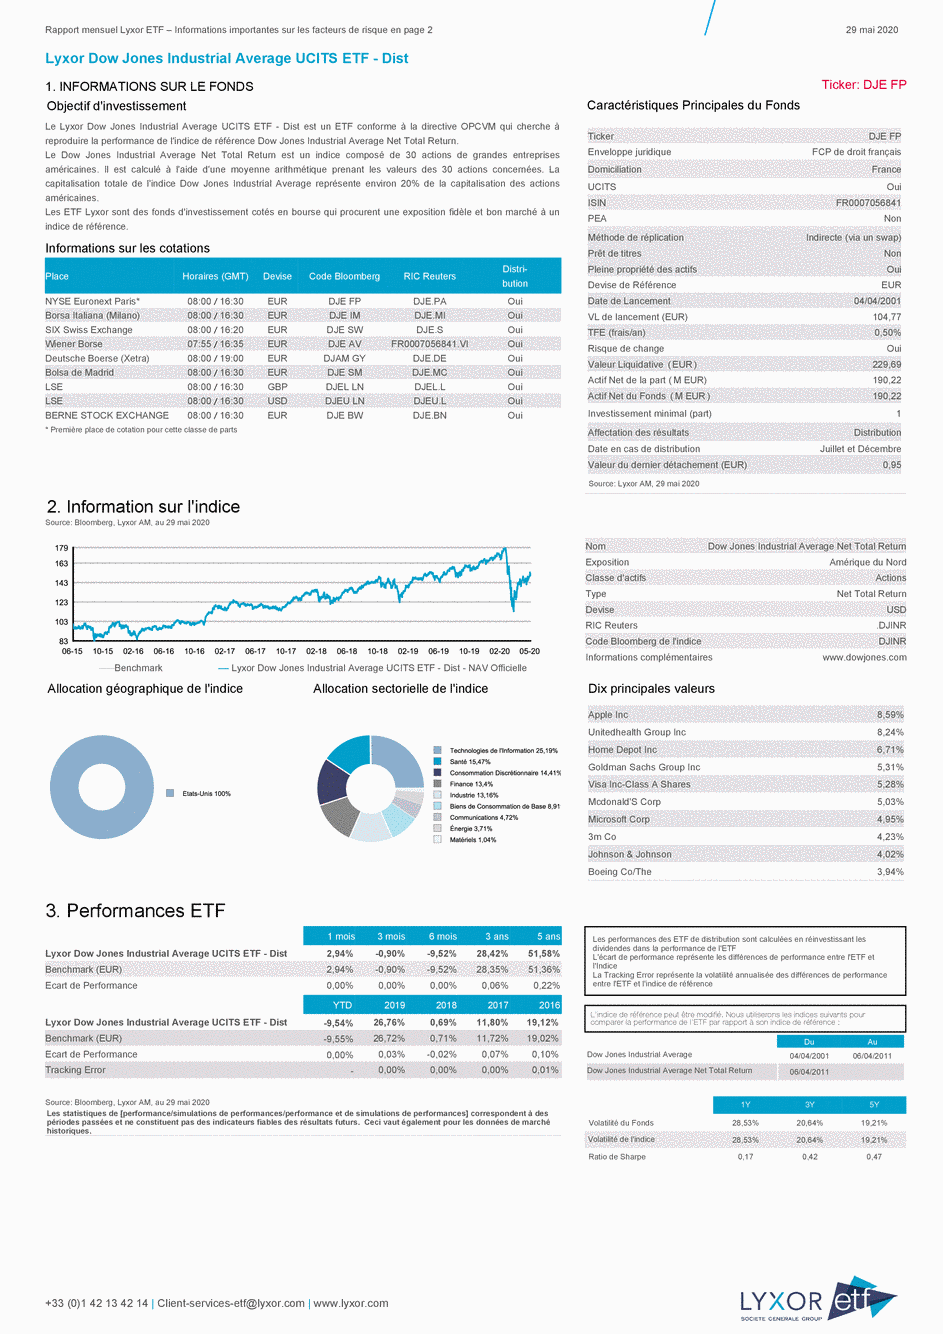 Reporting Lyxor Dow Jones Industrial Average UCITS ETF - Dist - 29/05/2020 - Français